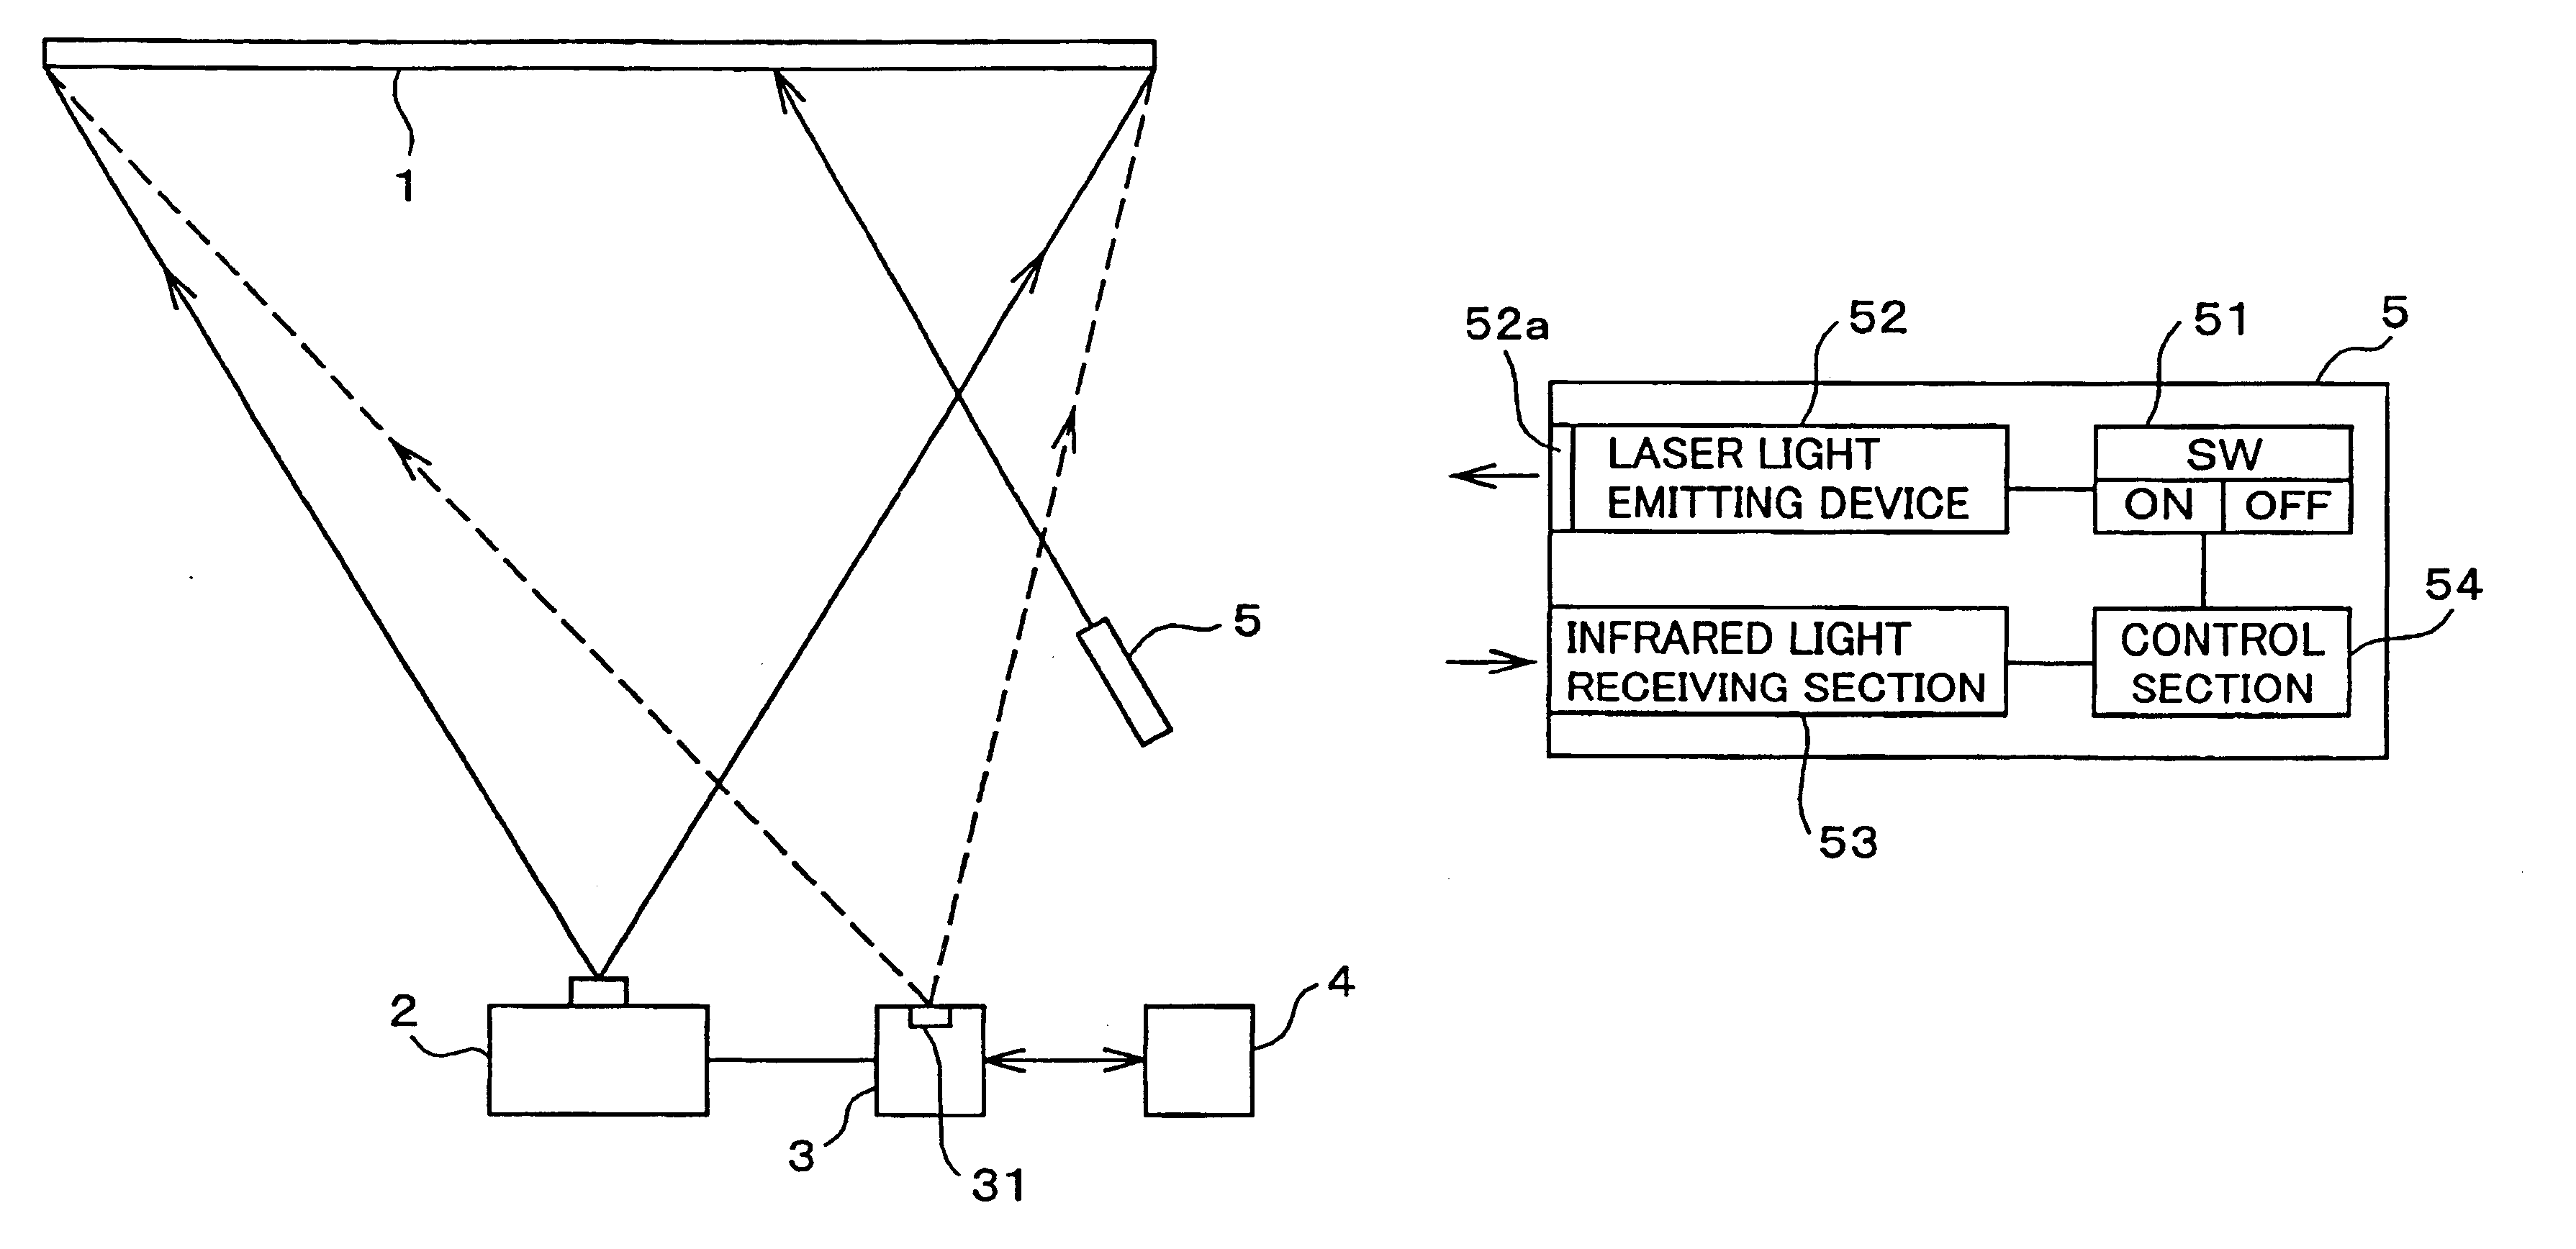 Presentation system using laser pointer